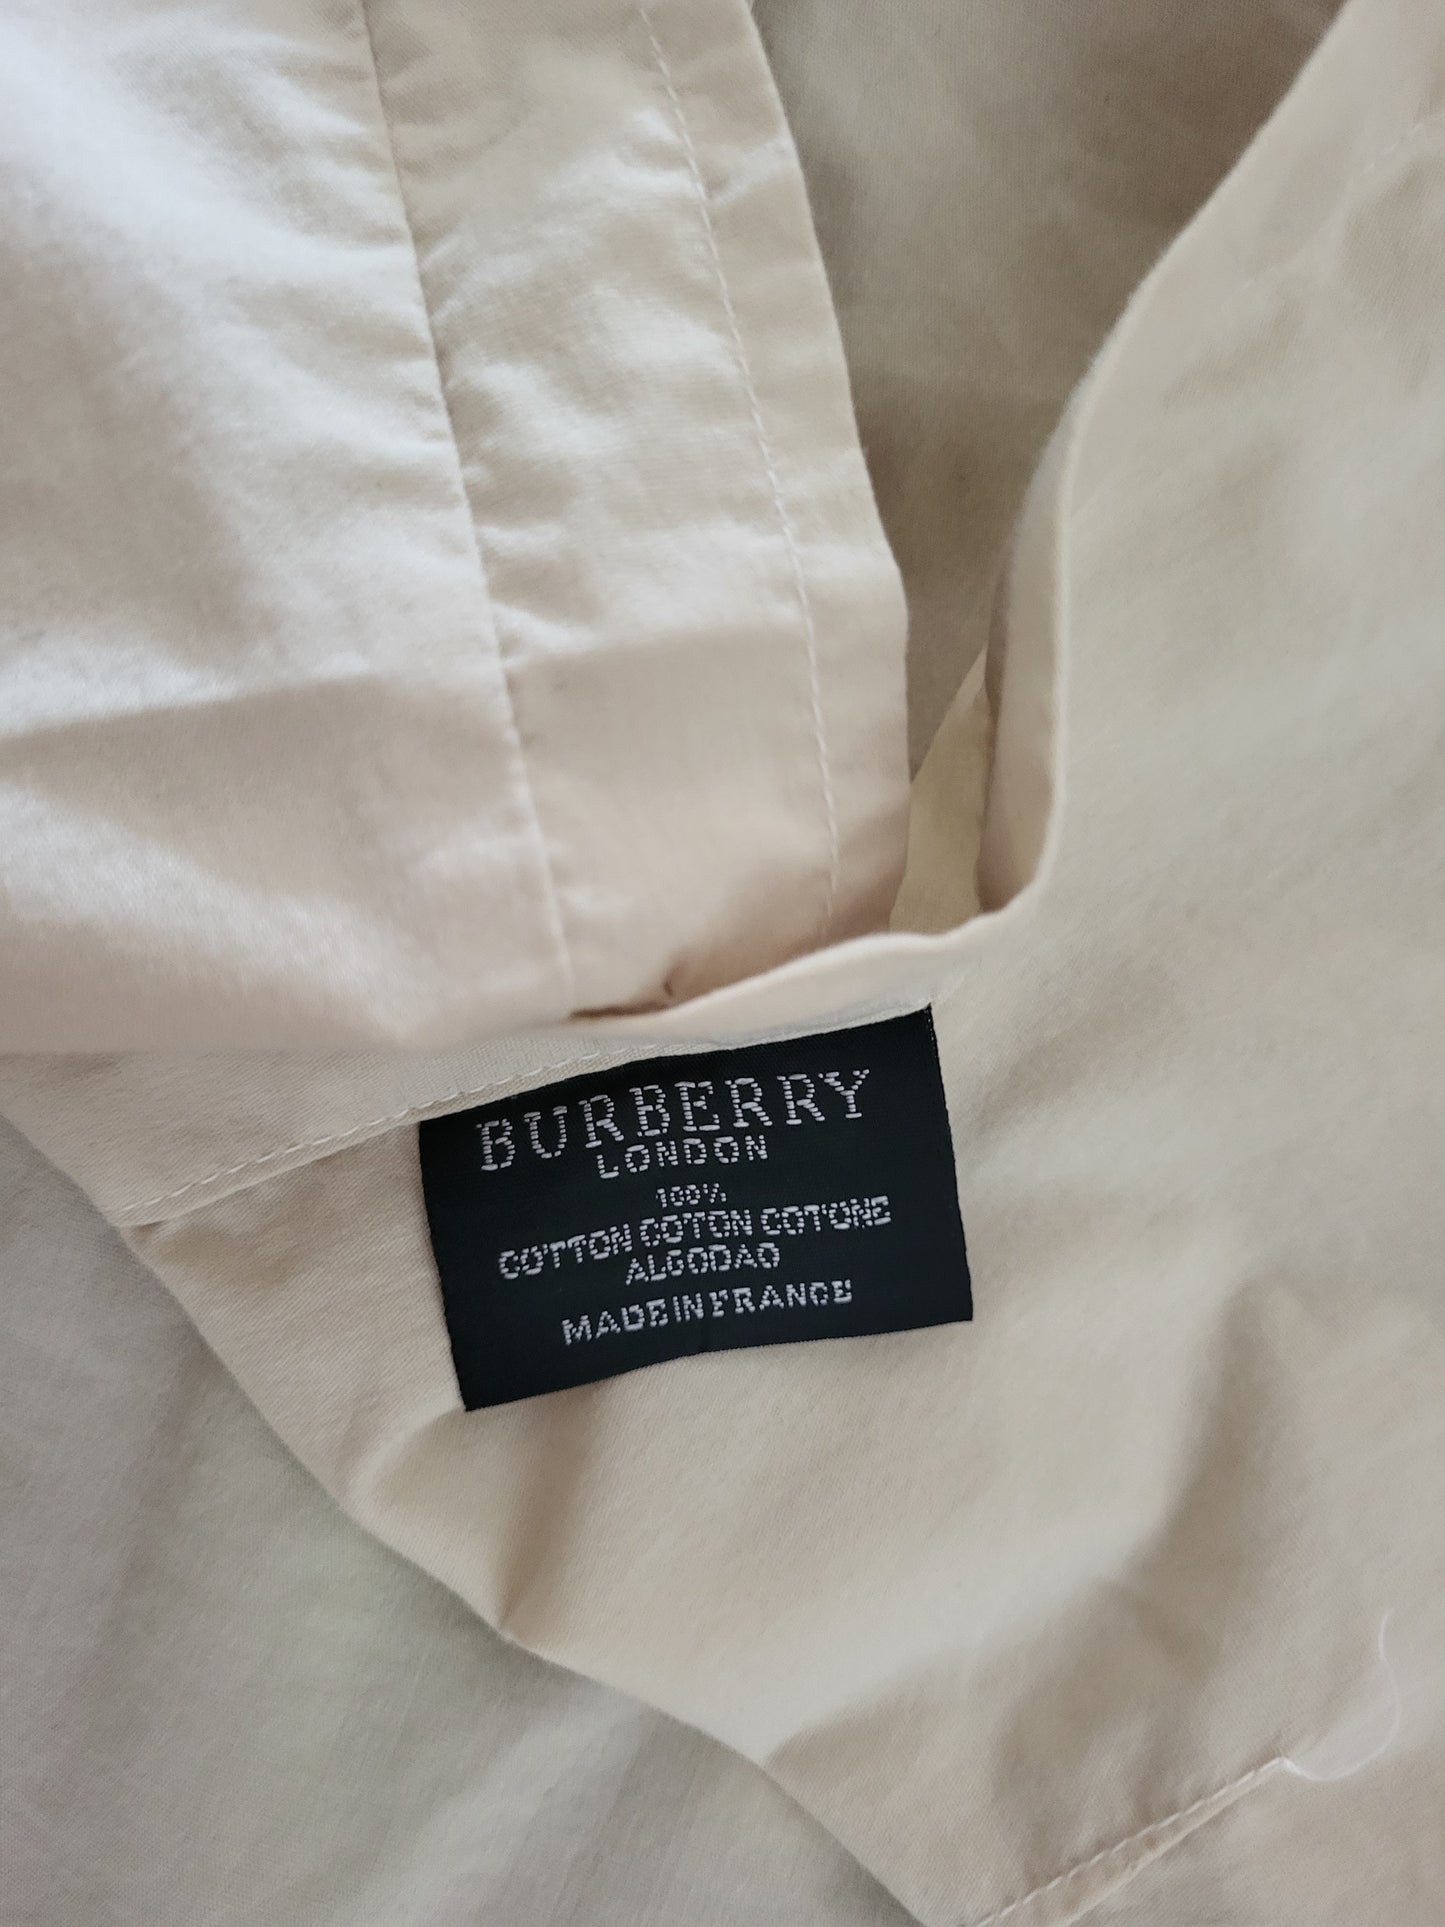 Burberry - Bluse/Hemd - Klassisch - Vintage - Beige - Damen - S/M